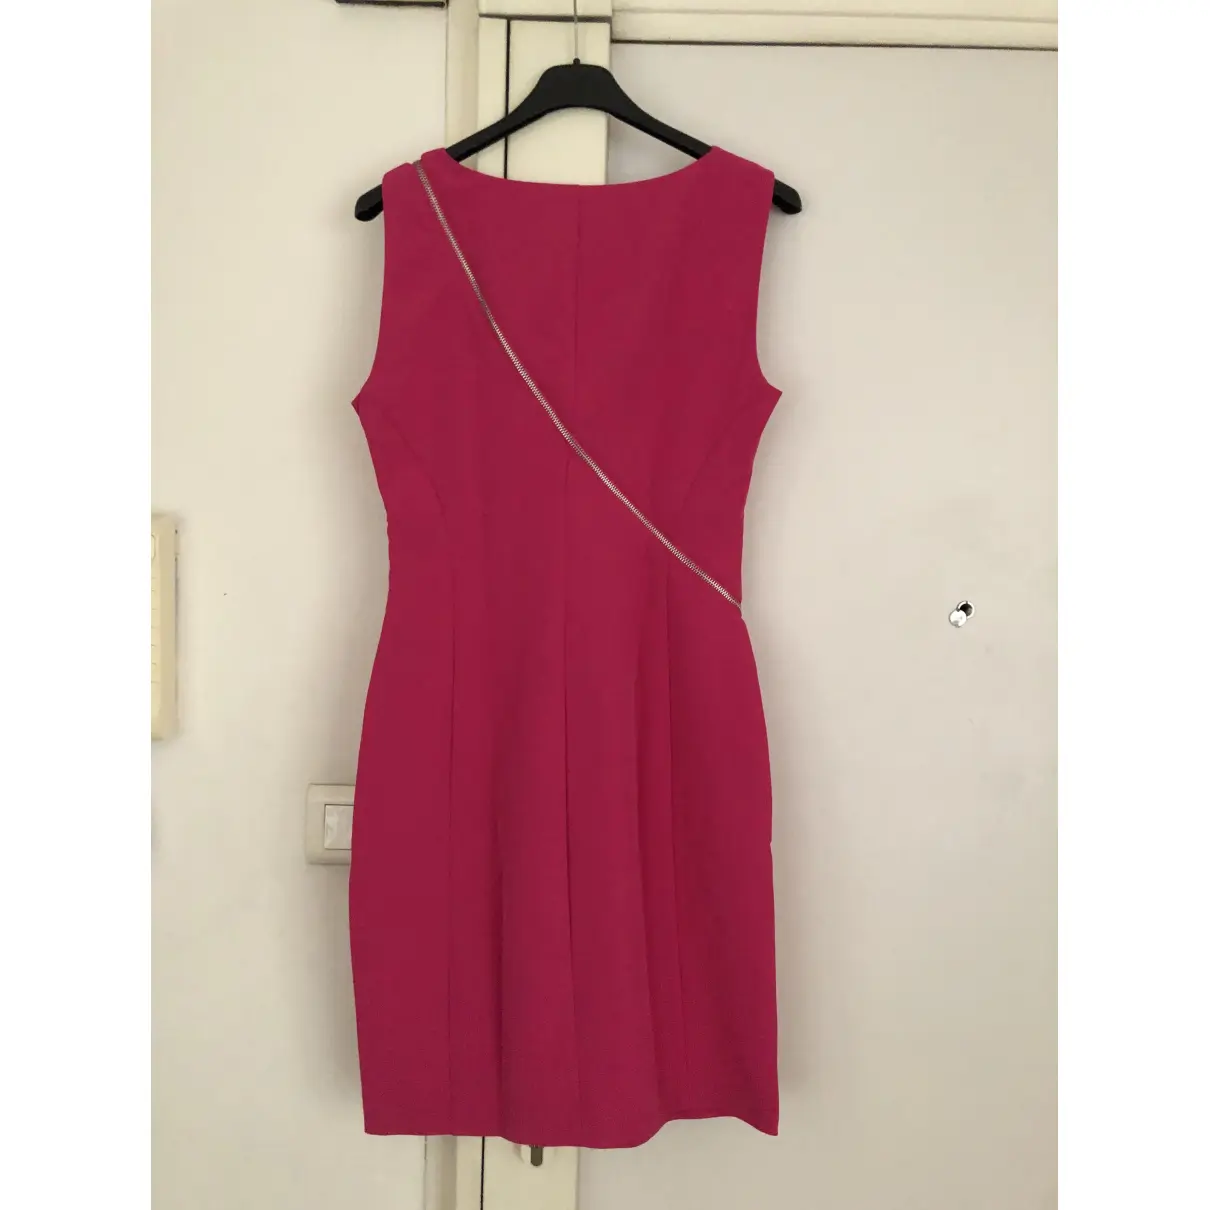 Buy Jeremy Scott Mini dress online